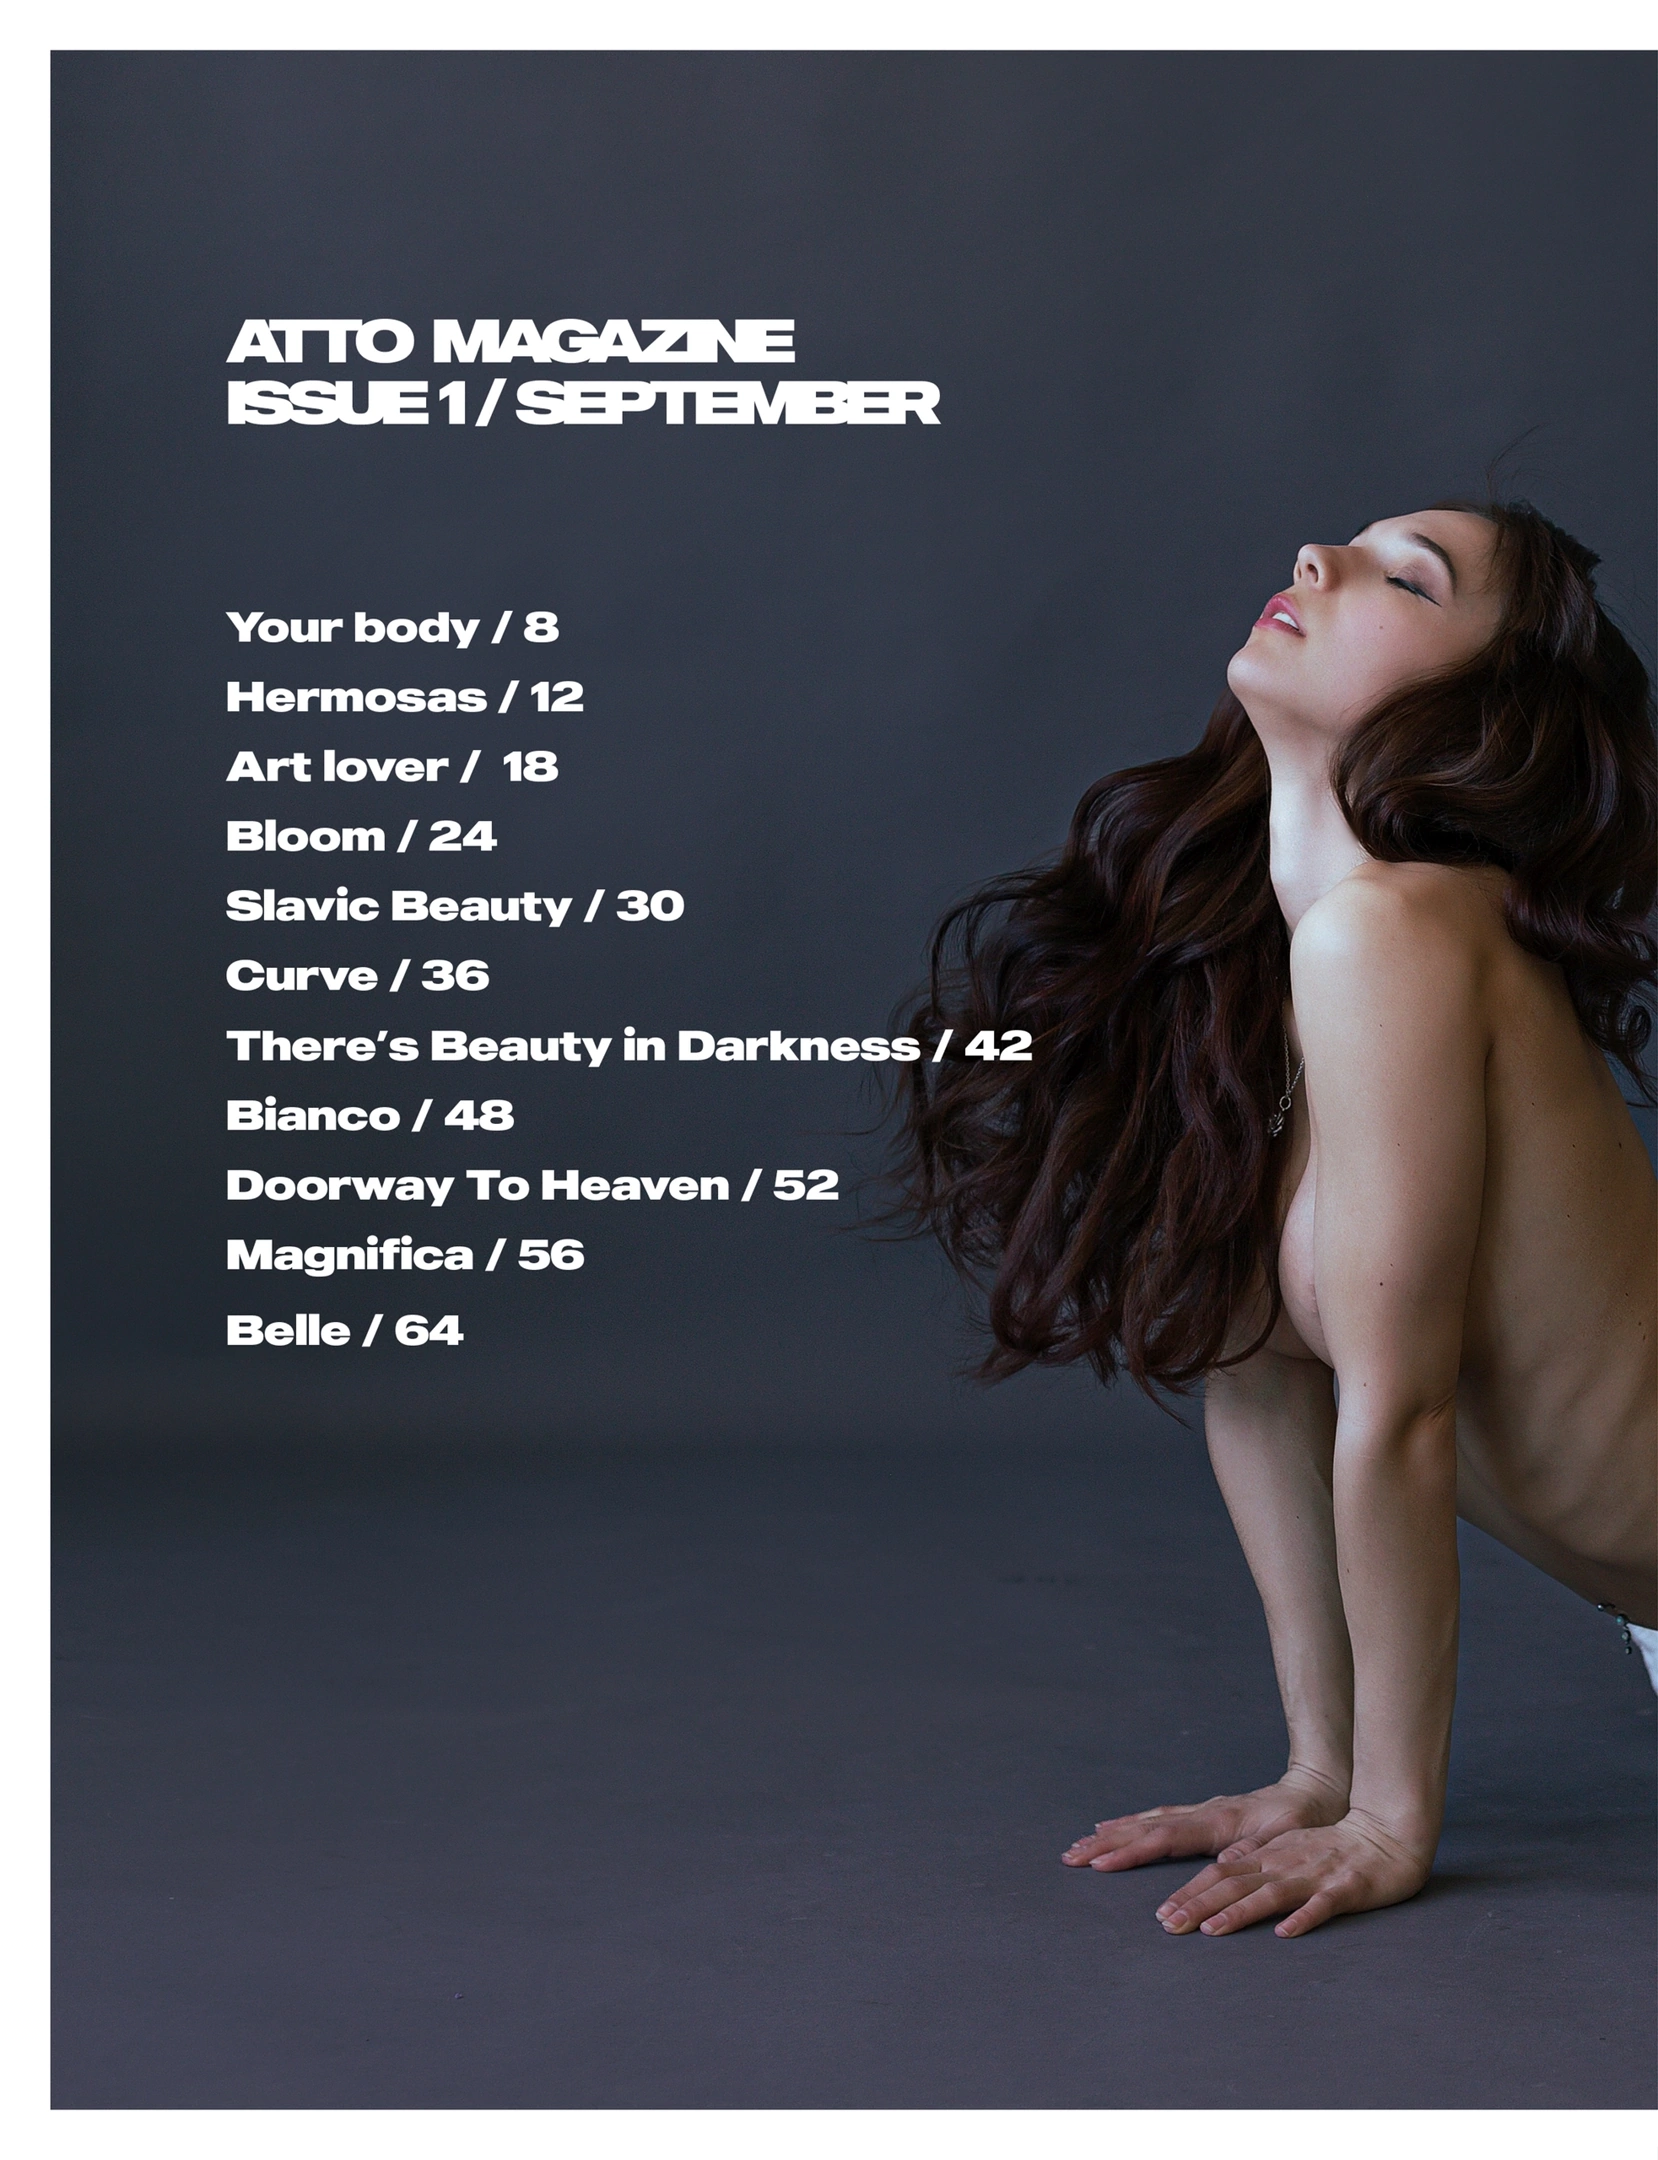 Magazine cover))) - NSFW, My, Magazine, Cover, Girls, The best, Boobs, Longpost